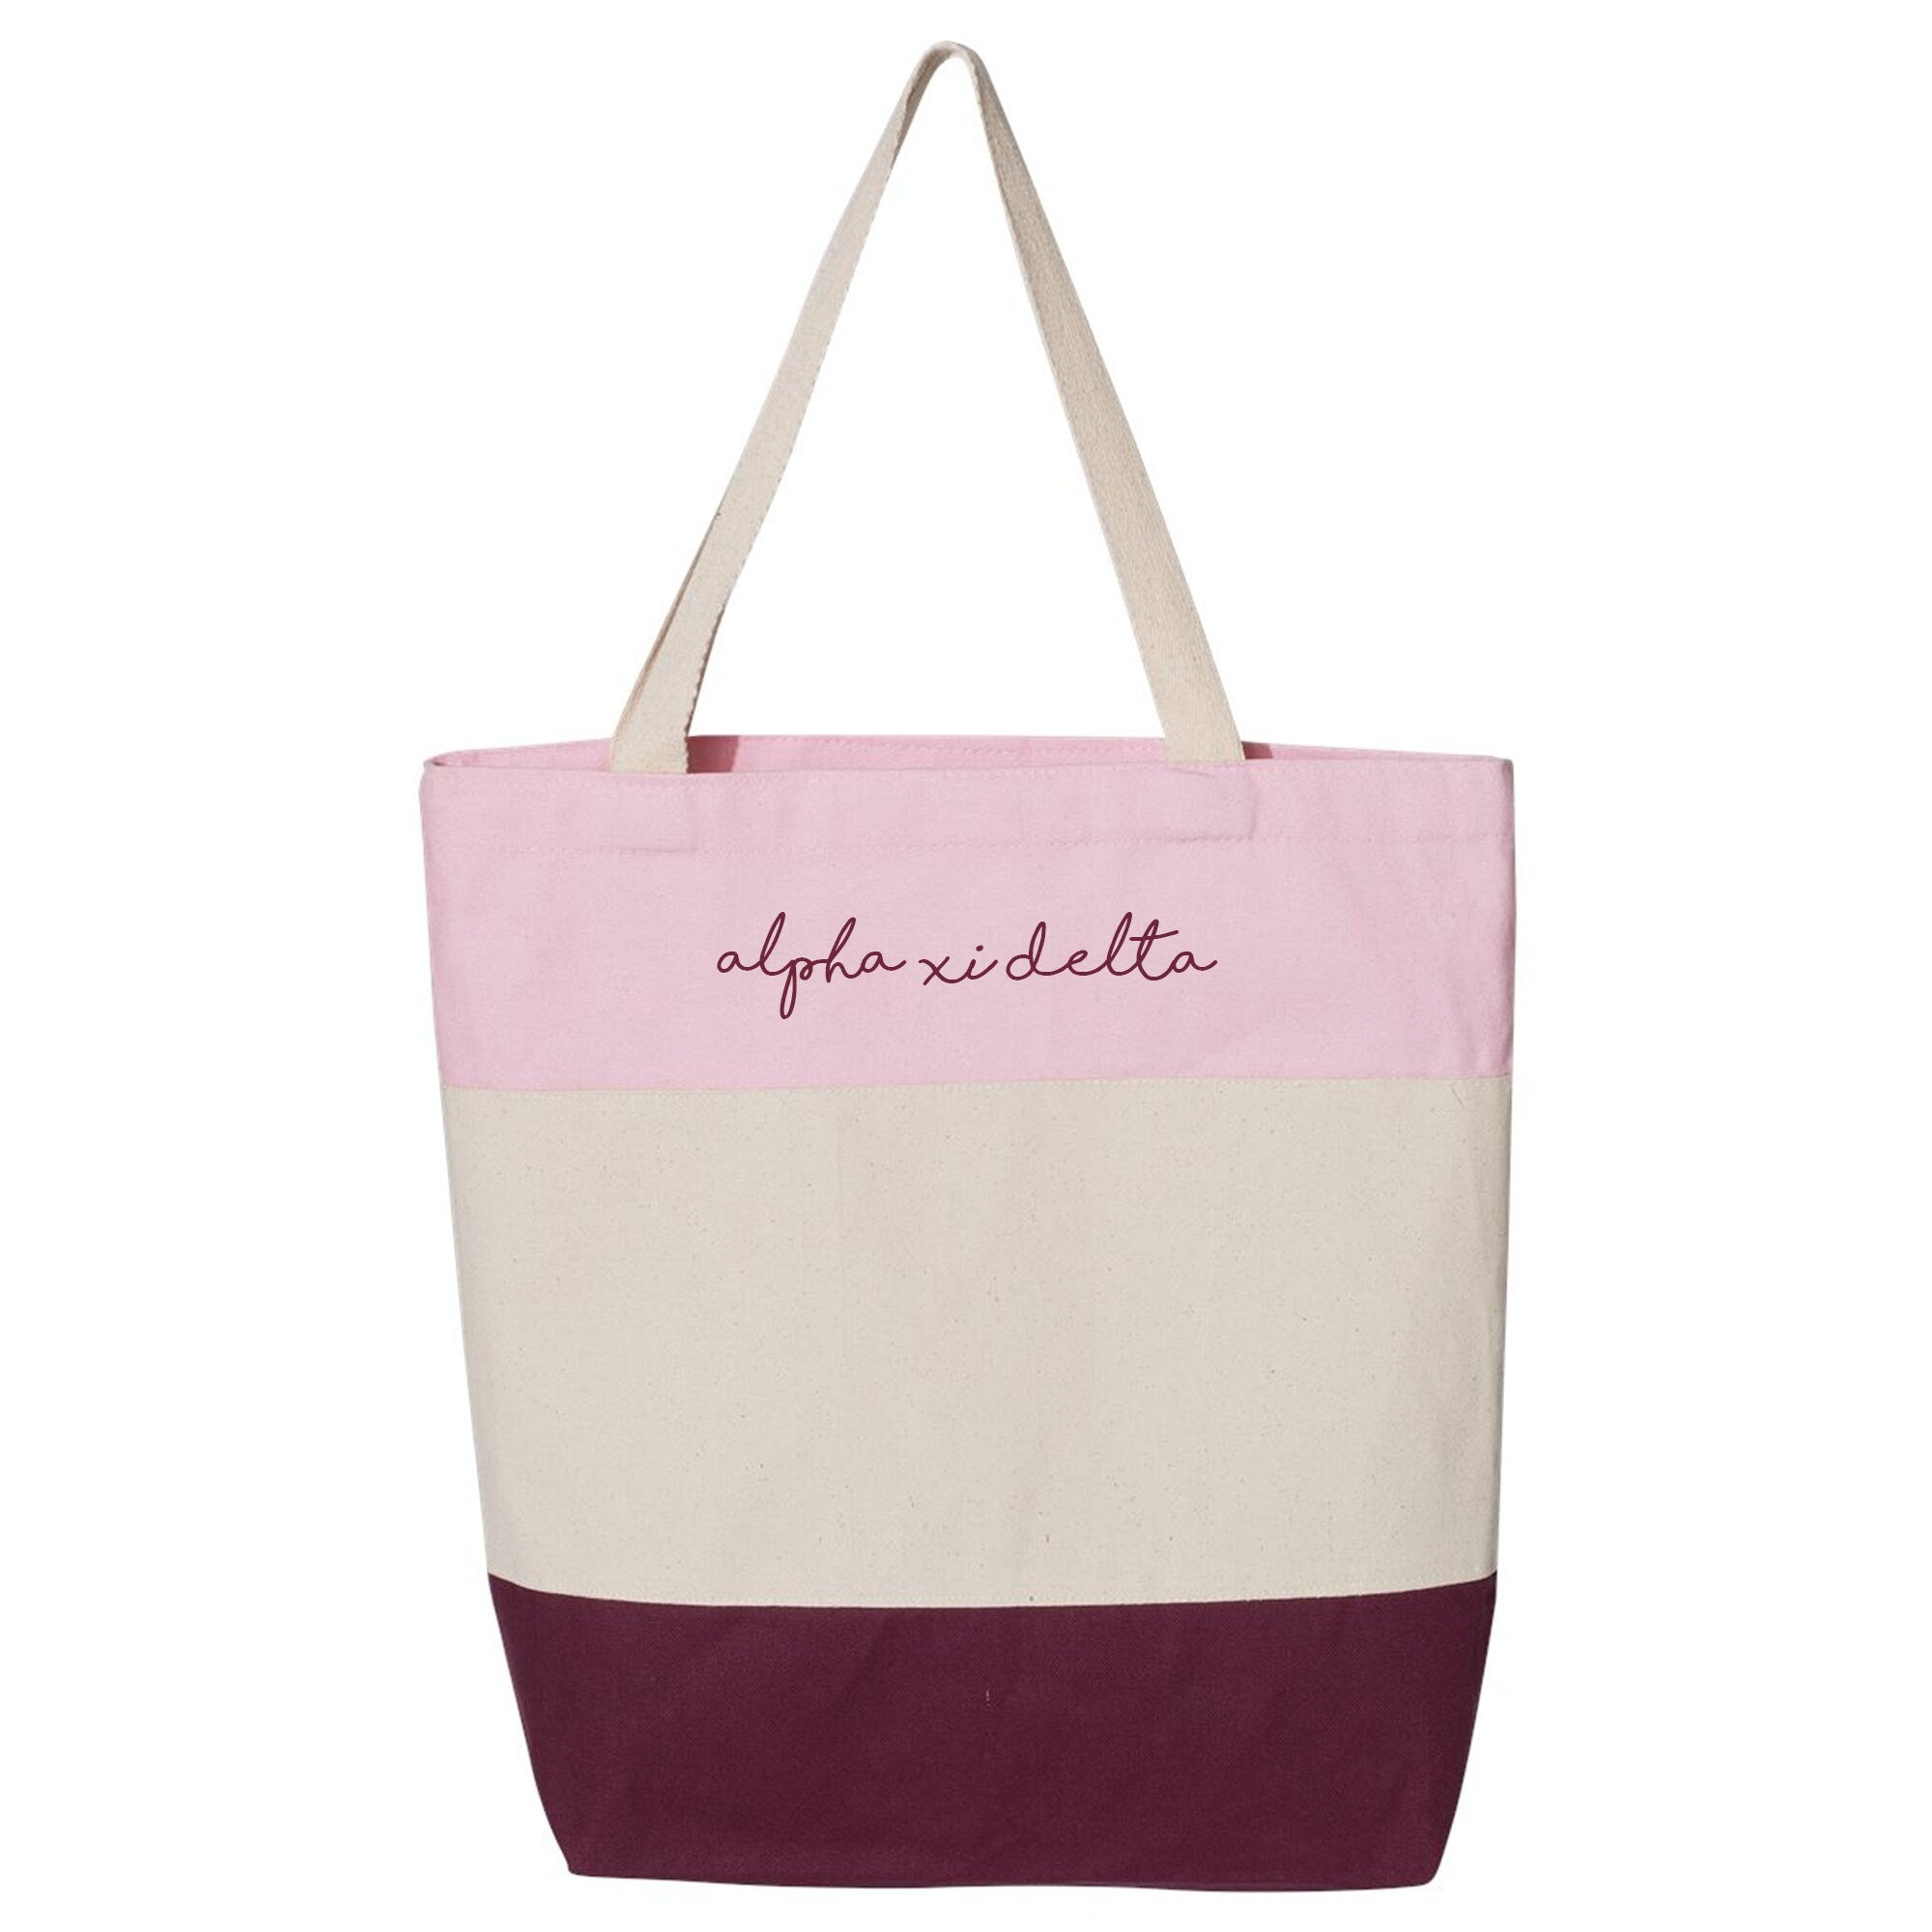 Alpha Xi Delta - Tote Bag, Sorority Gift, Bid Day Gift, Big & Little Reveal - Go Greek Chic